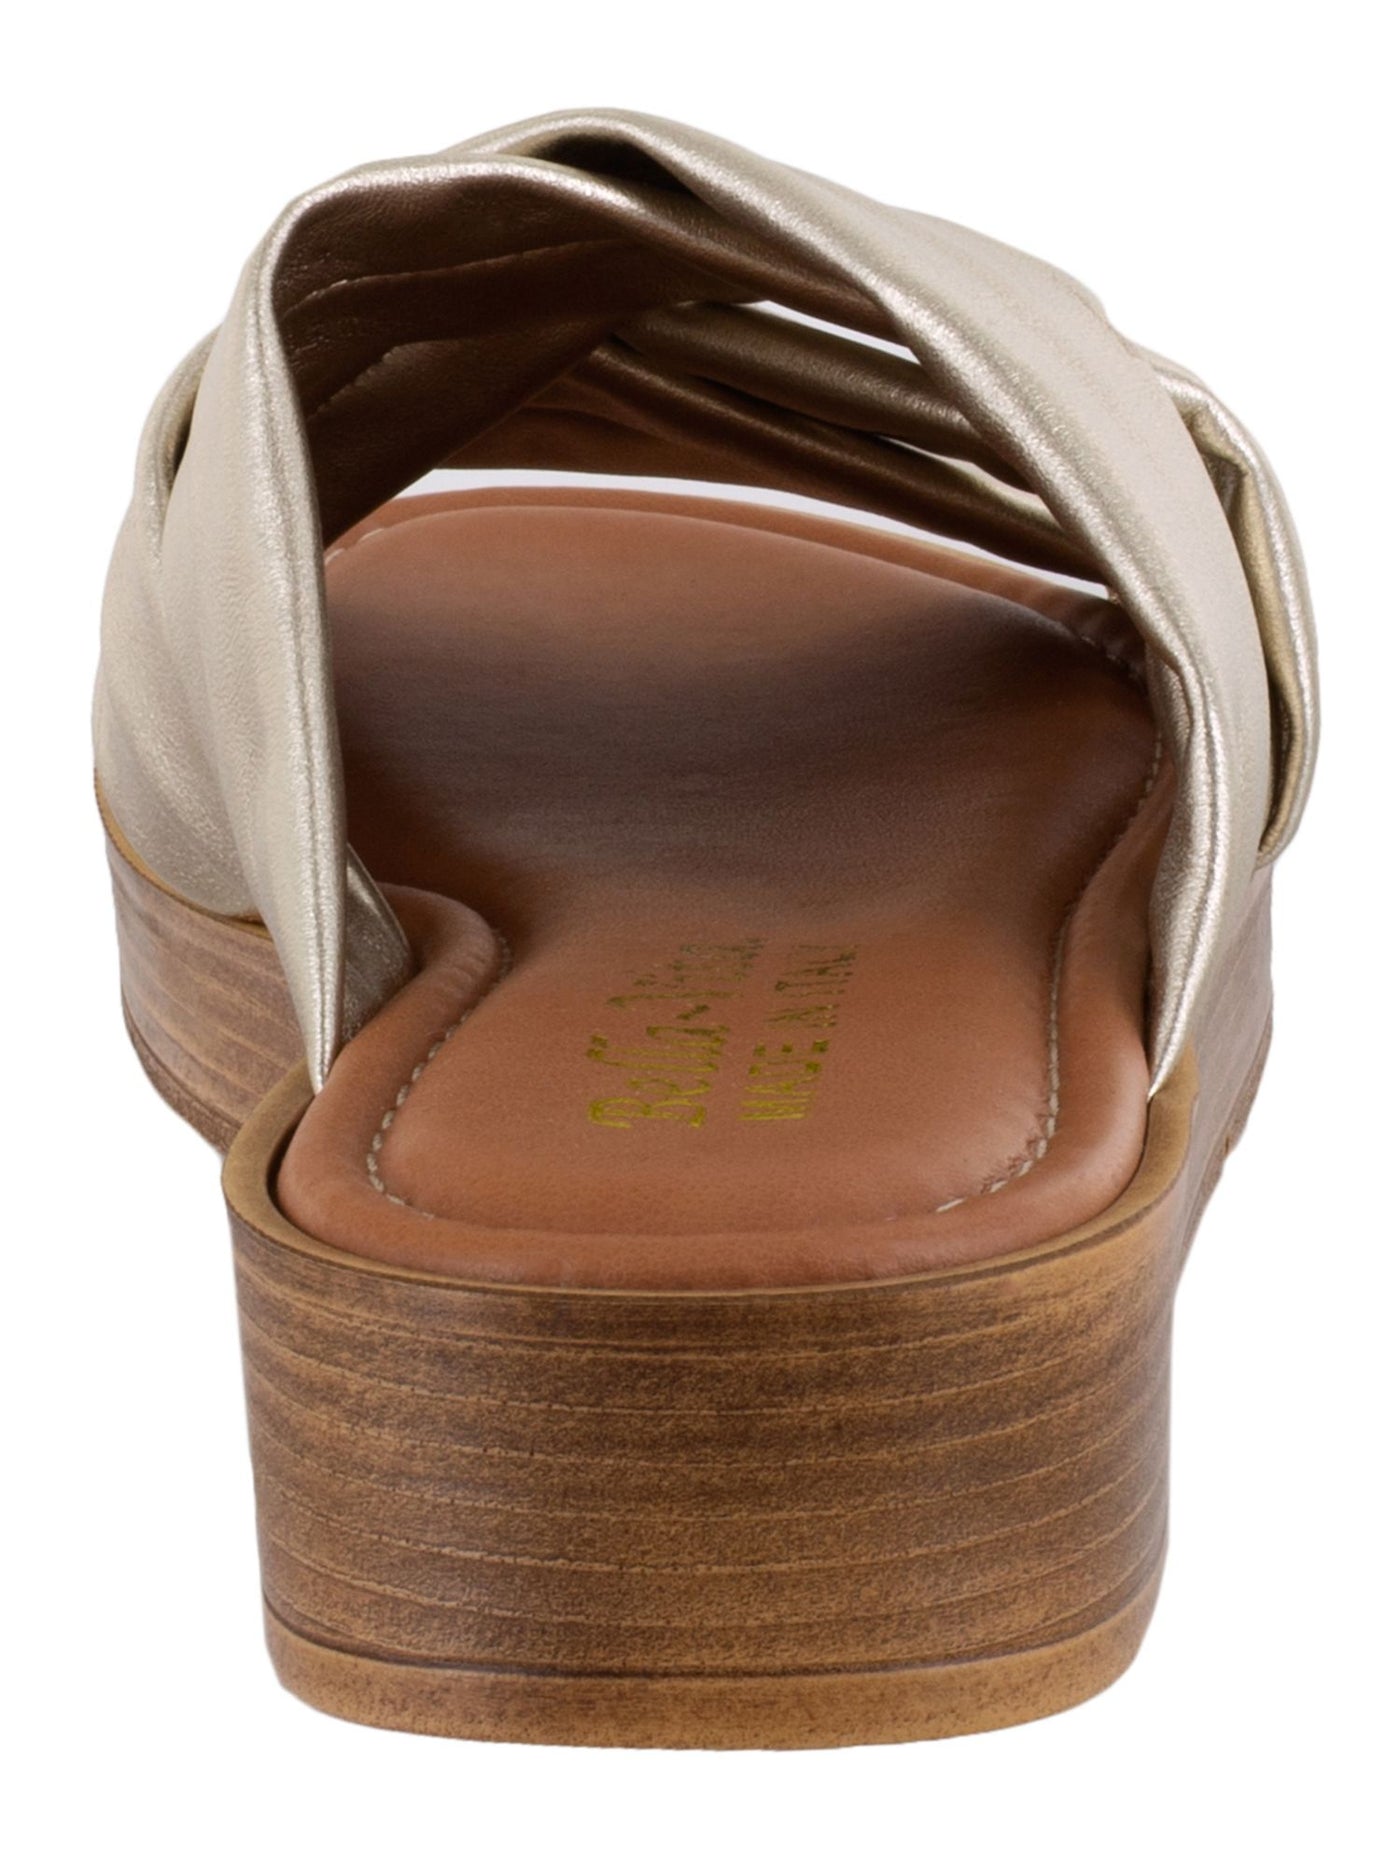 BELLA VITA Womens Champagne Gold Logo Metallic Padded Woven Tor-italy Round Toe Wedge Slip On Leather Dress Slide Sandals Shoes 8 WW